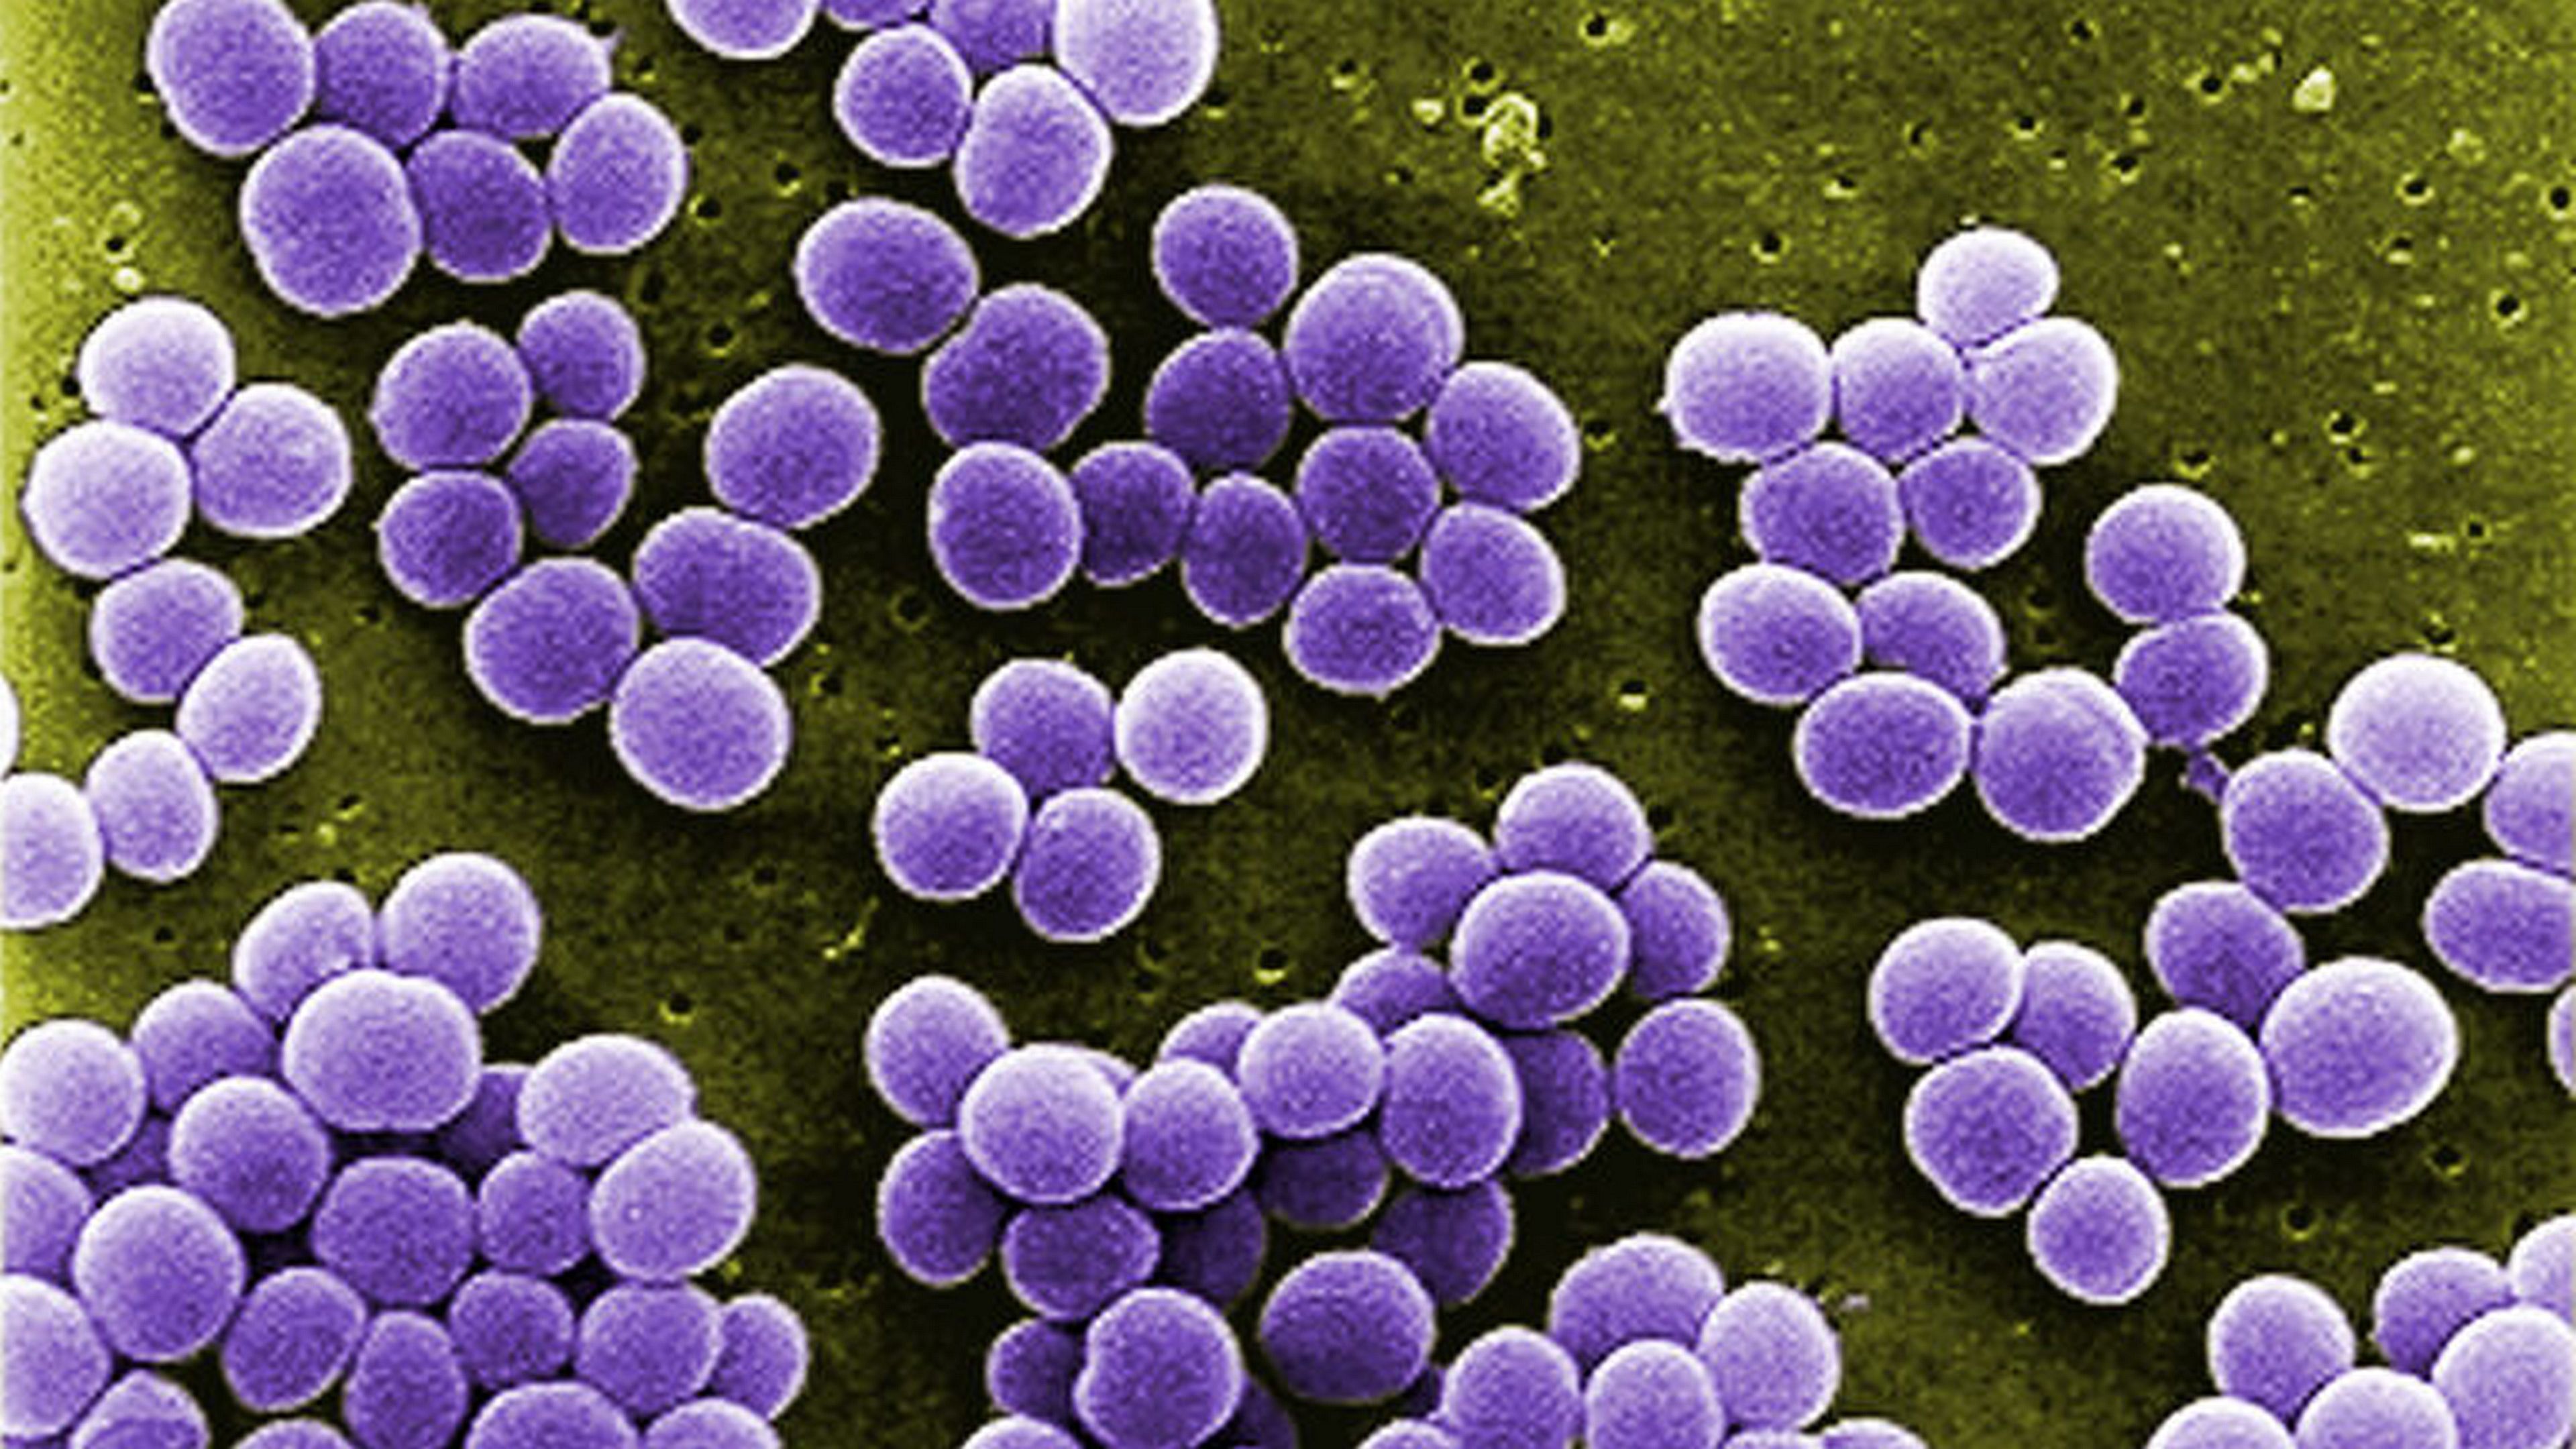 staphylocococcus aureus